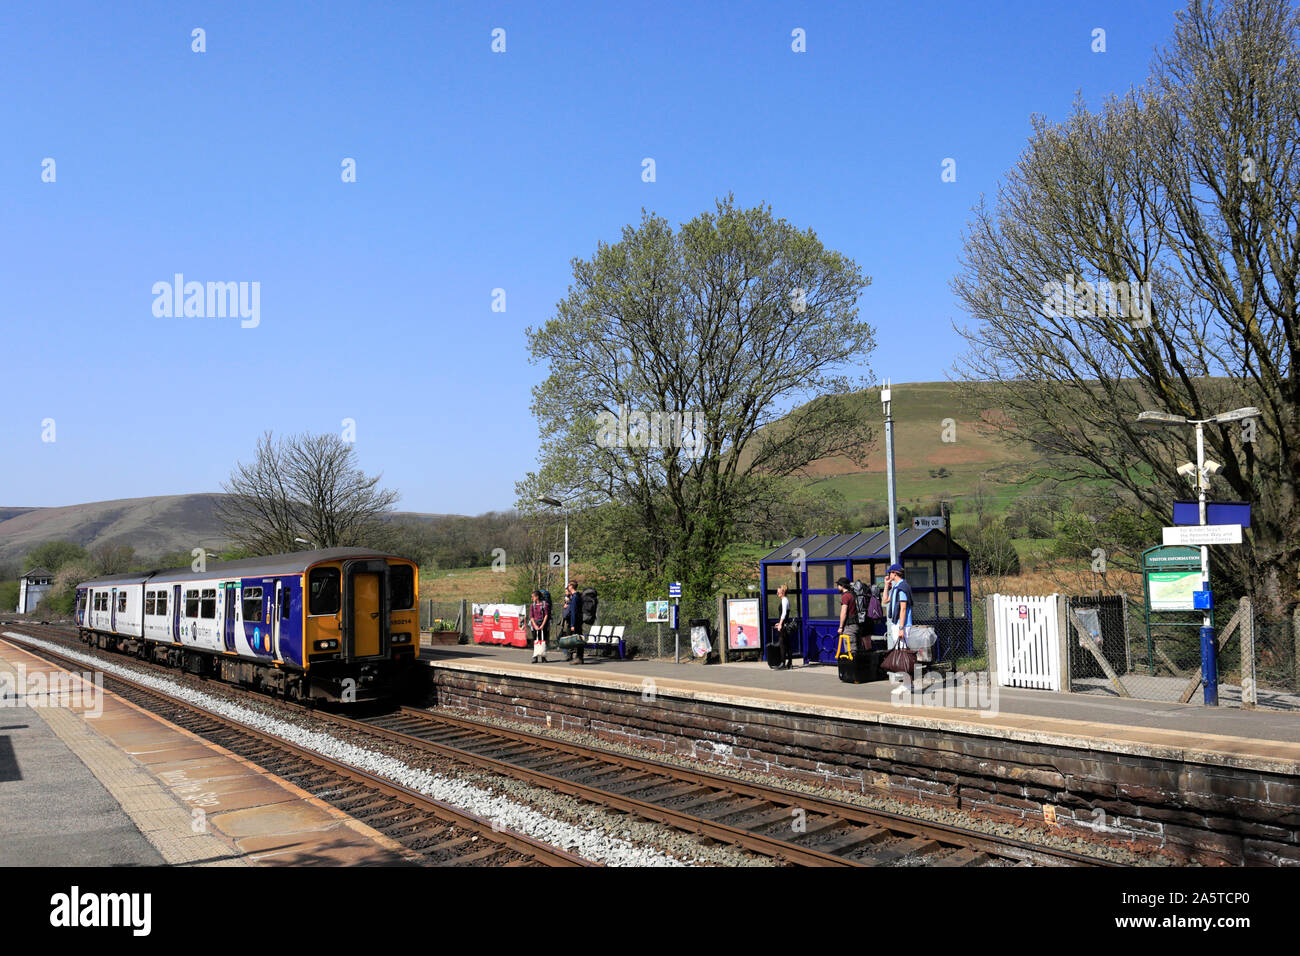 Northern Trains 150214 at Edale railway station, Peak District National Park, Derbyshire, England, UK Stock Photo